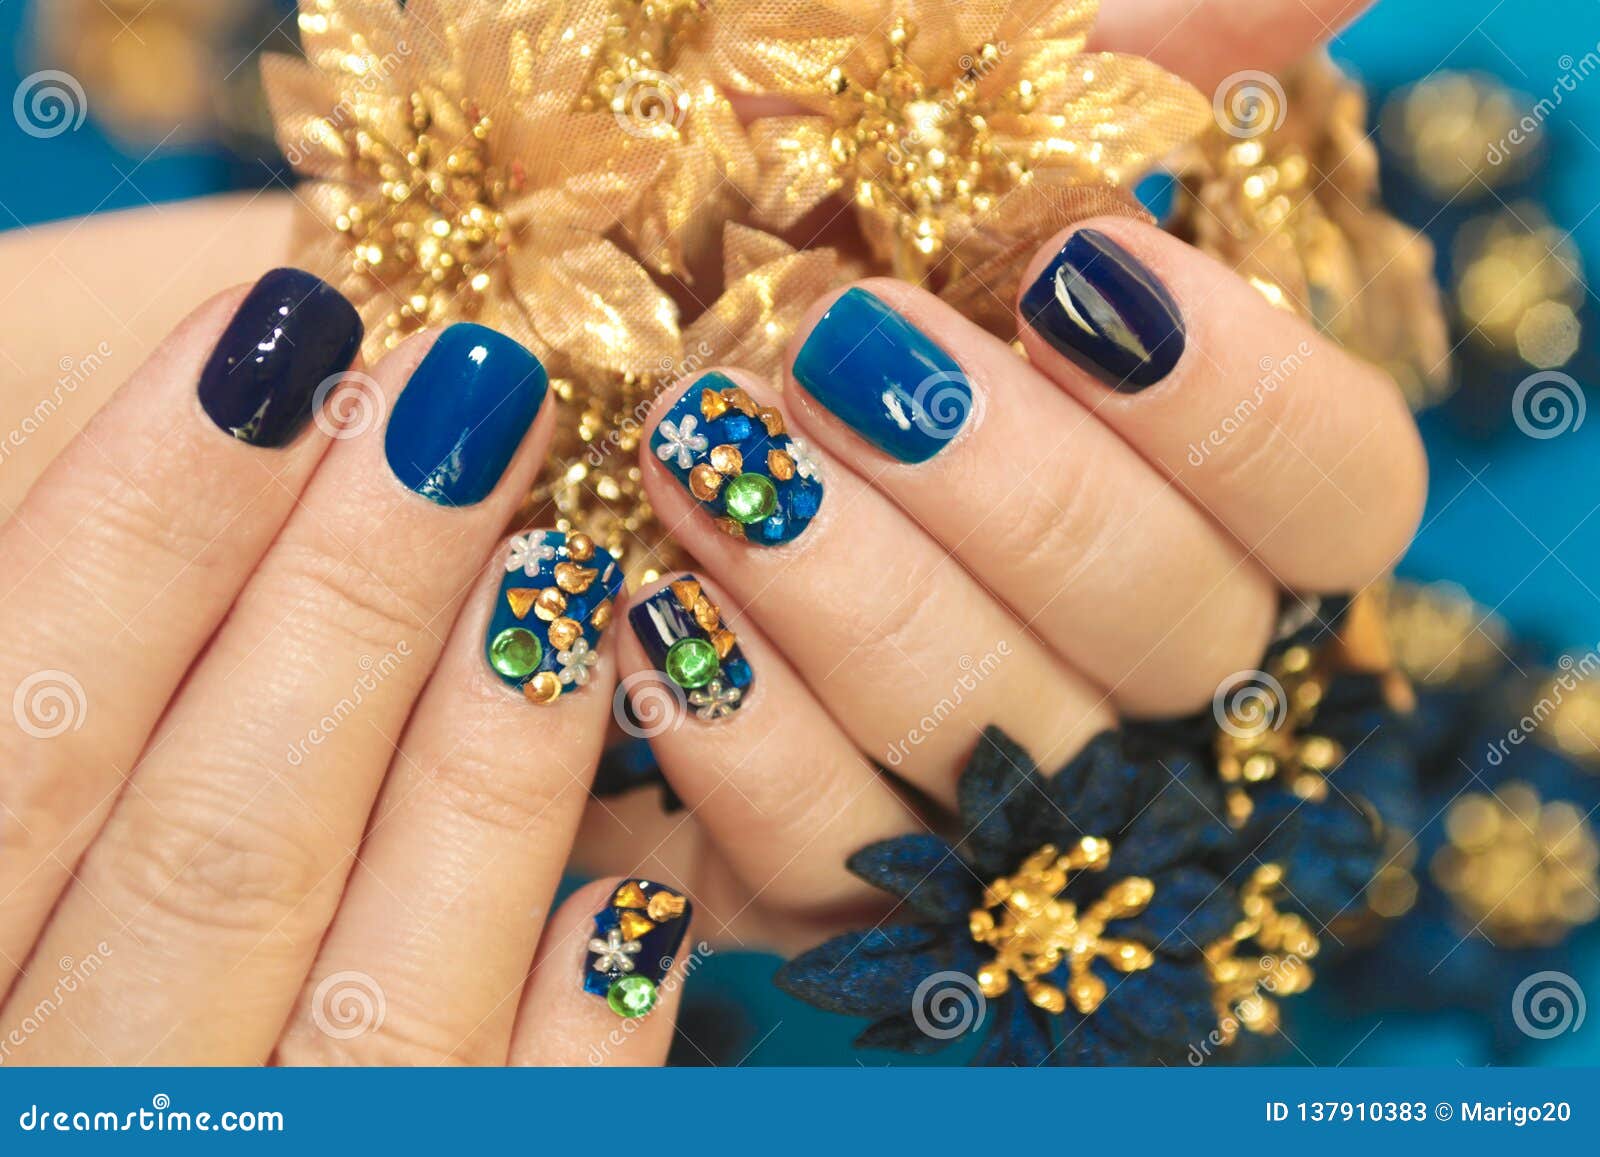 50+ Royal Blue Nails That Are Trending Right Now | Babyblaue nägel, Nägel  inspiration, Nägel gel